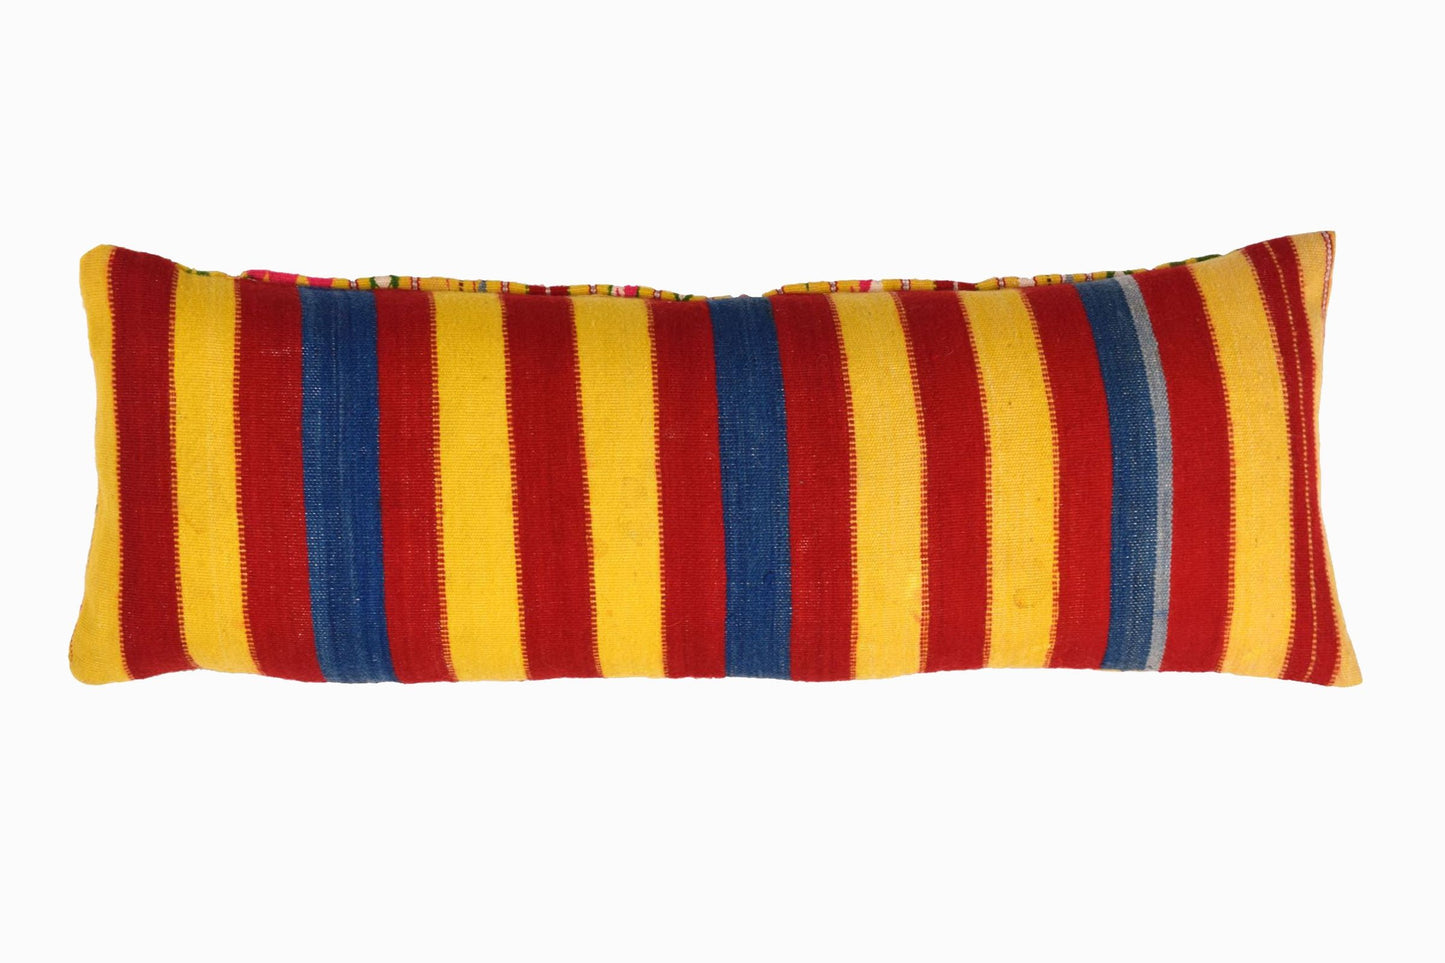 Hand woven South American wool cushion